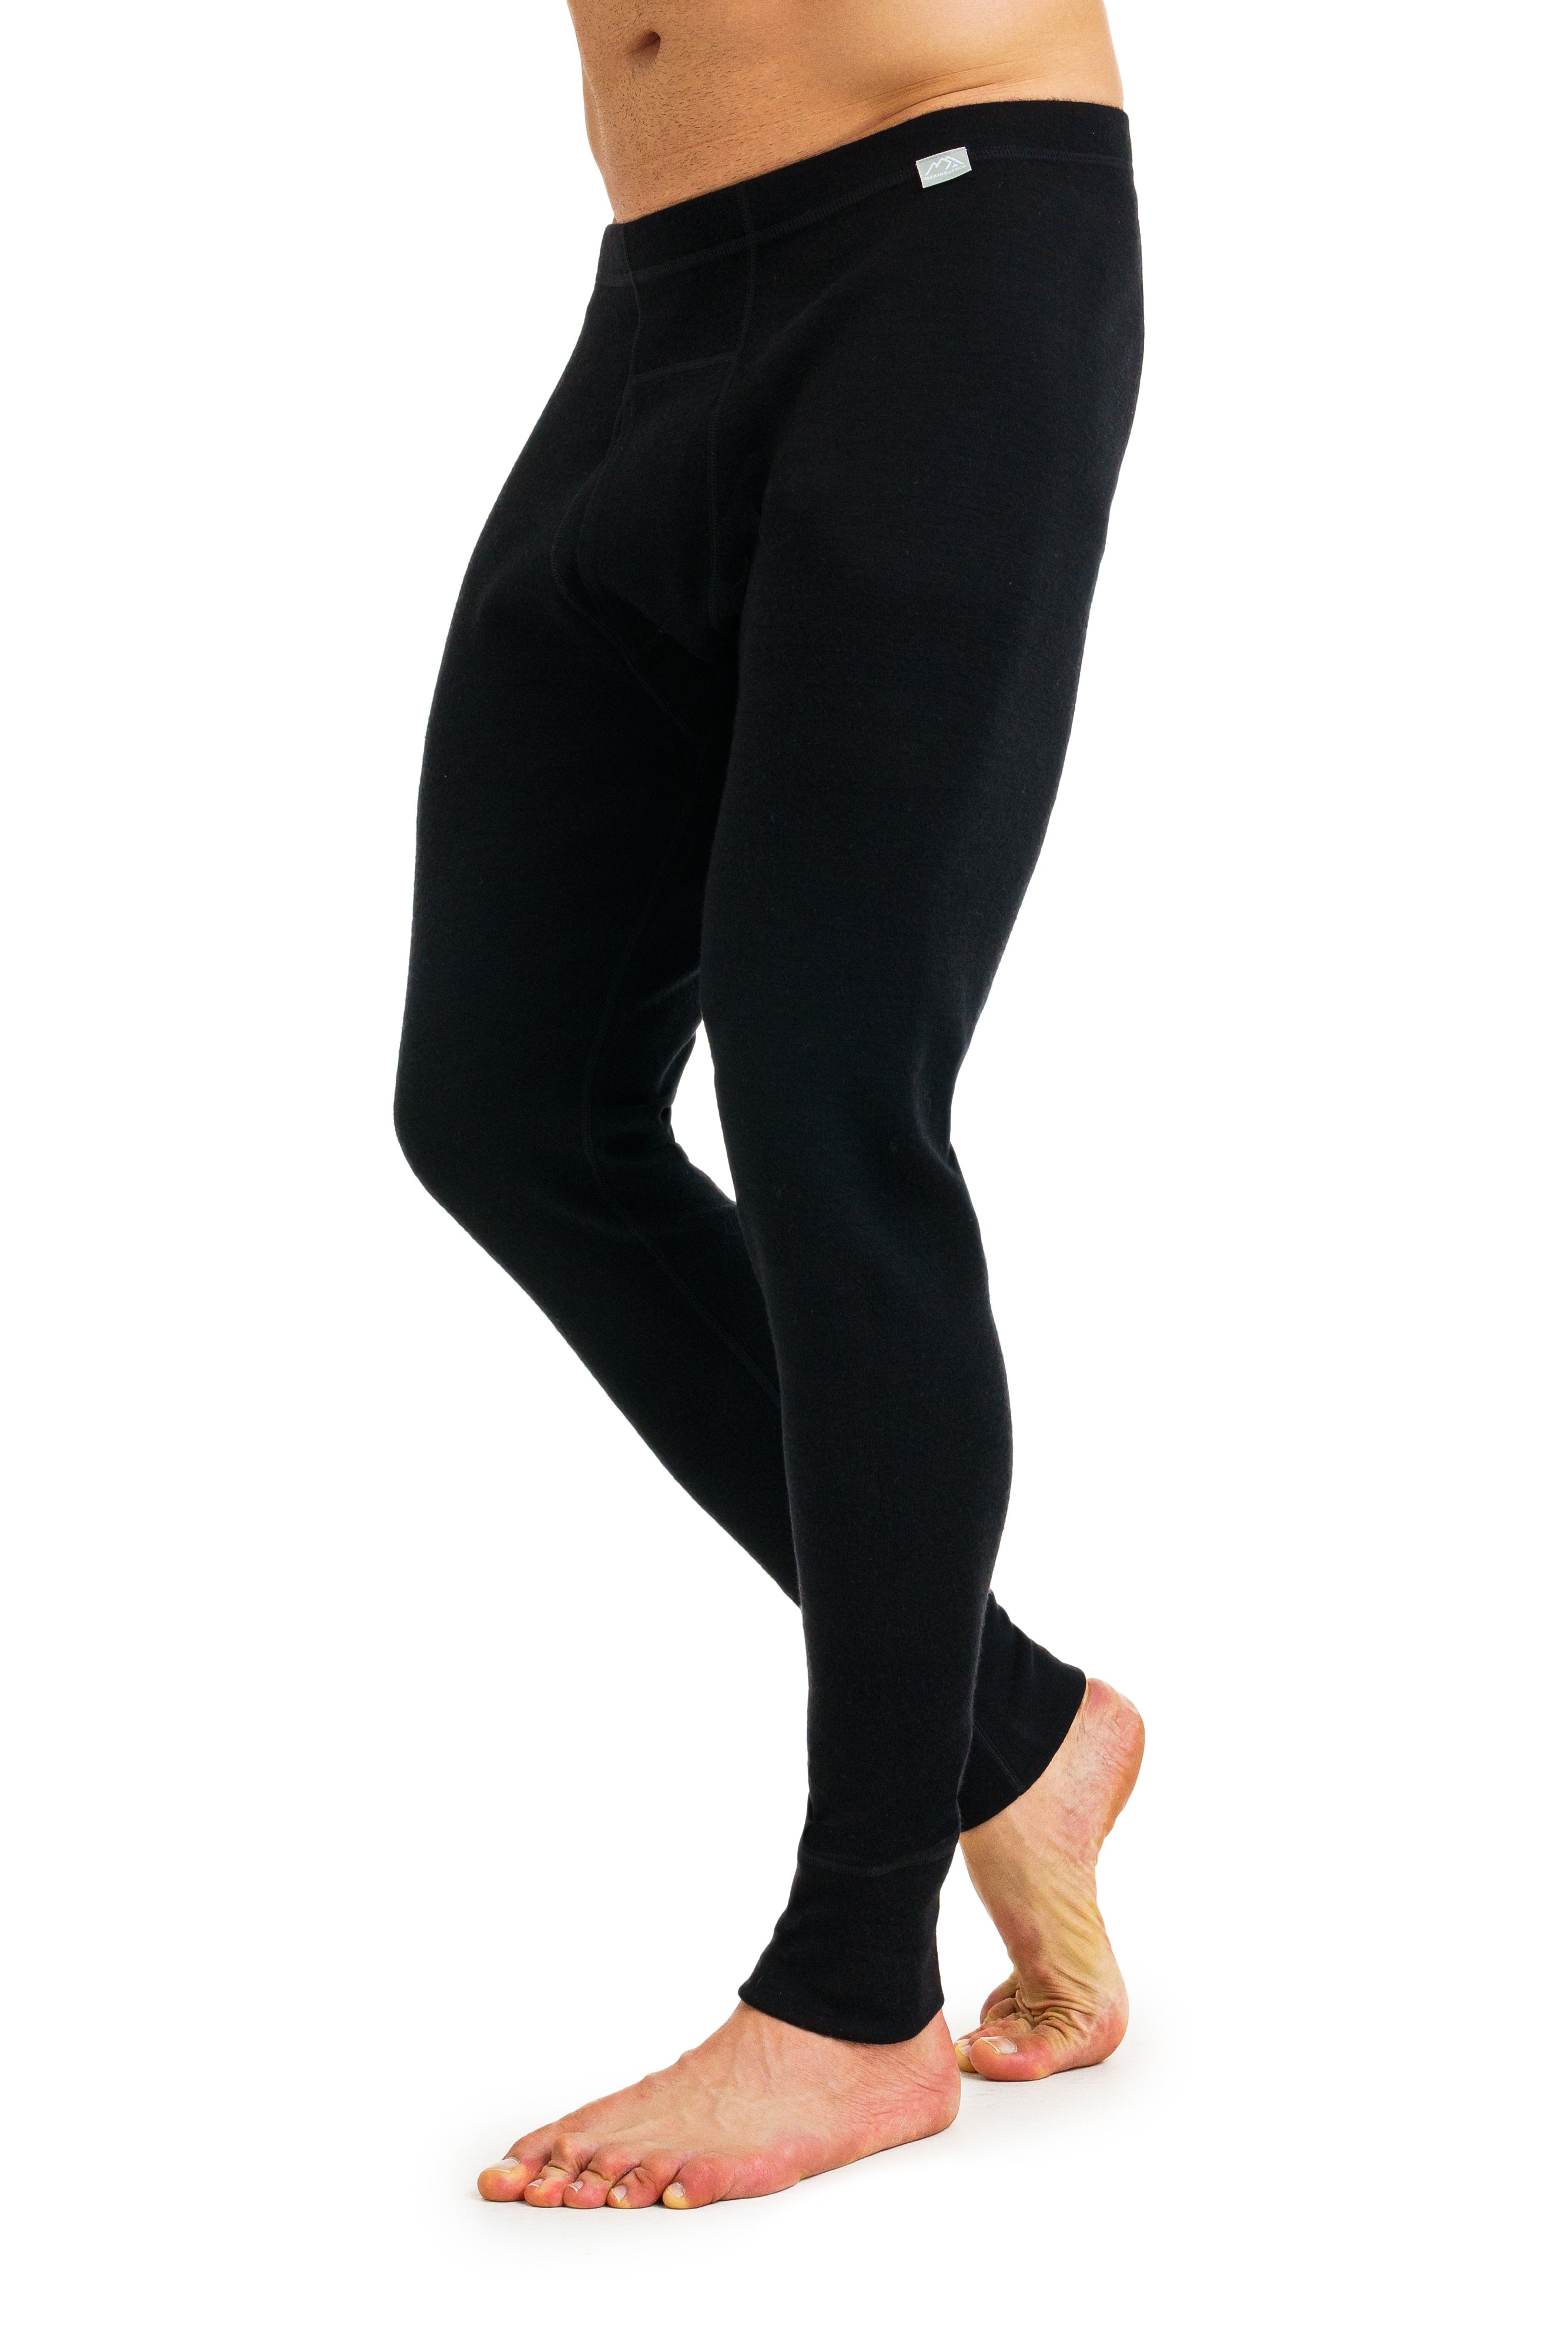 Hanes Women's X-Temp Yoga Comfy Legging